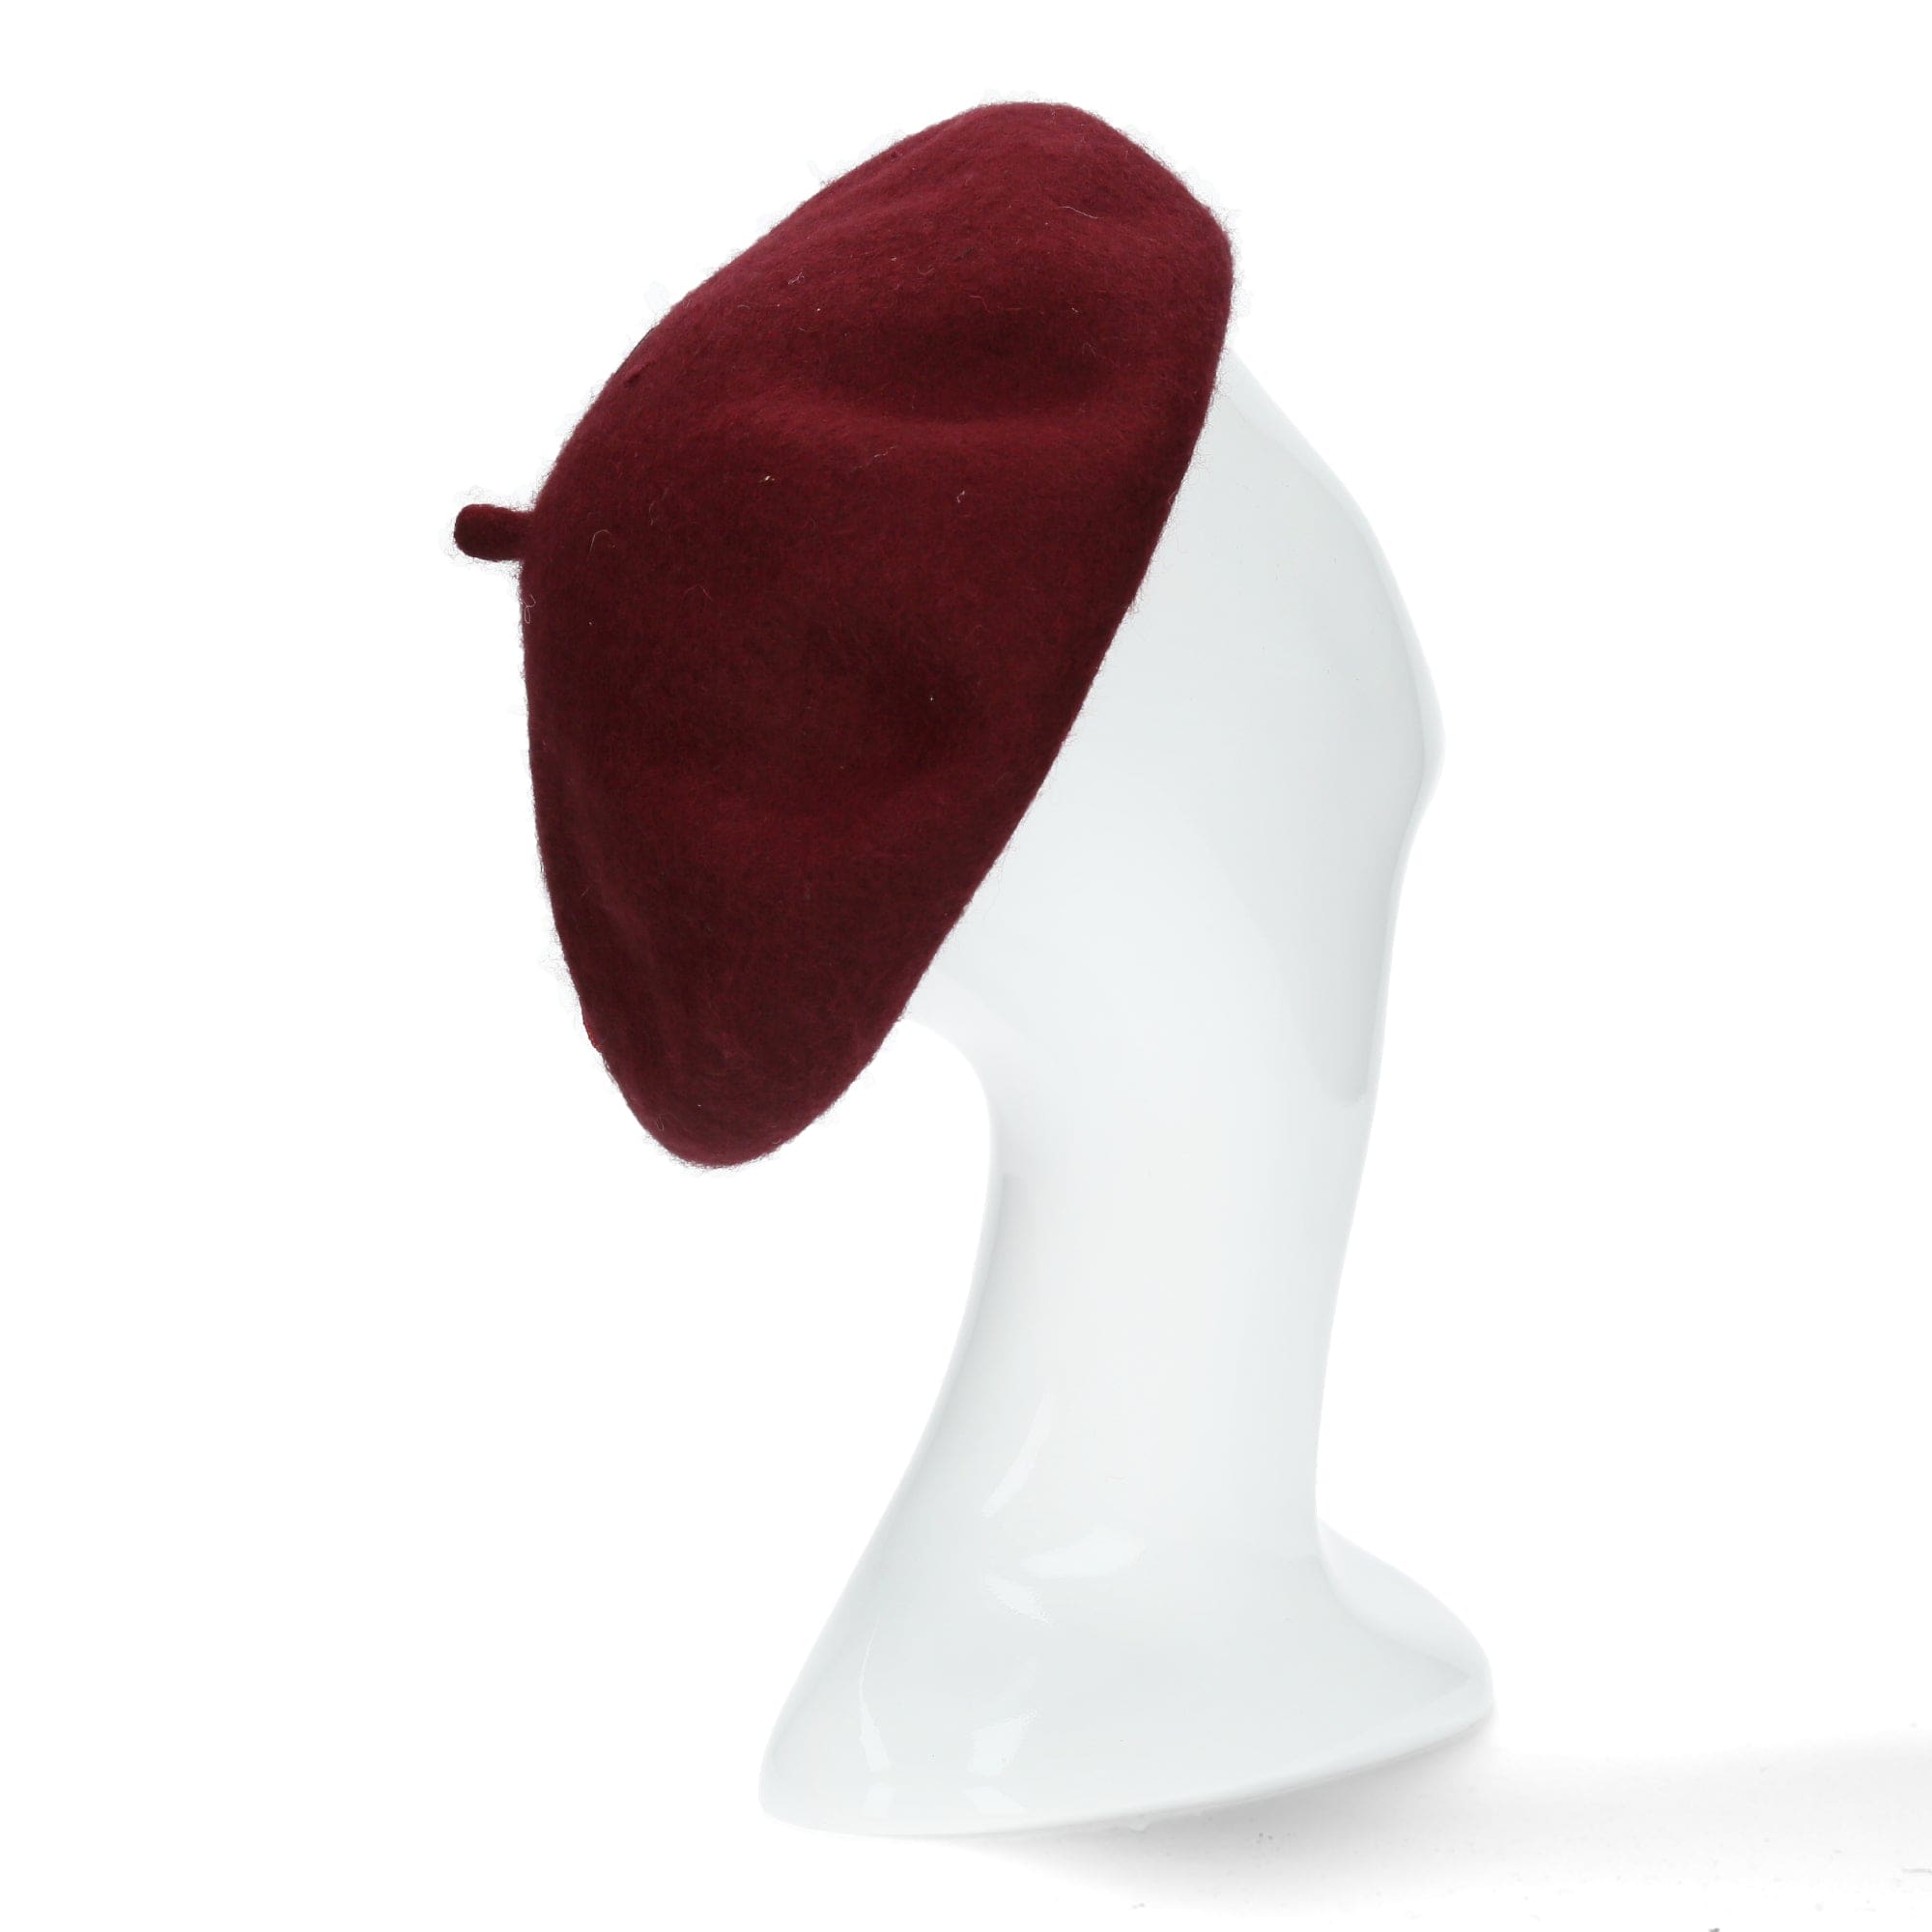 Emylle flower beret - Hats